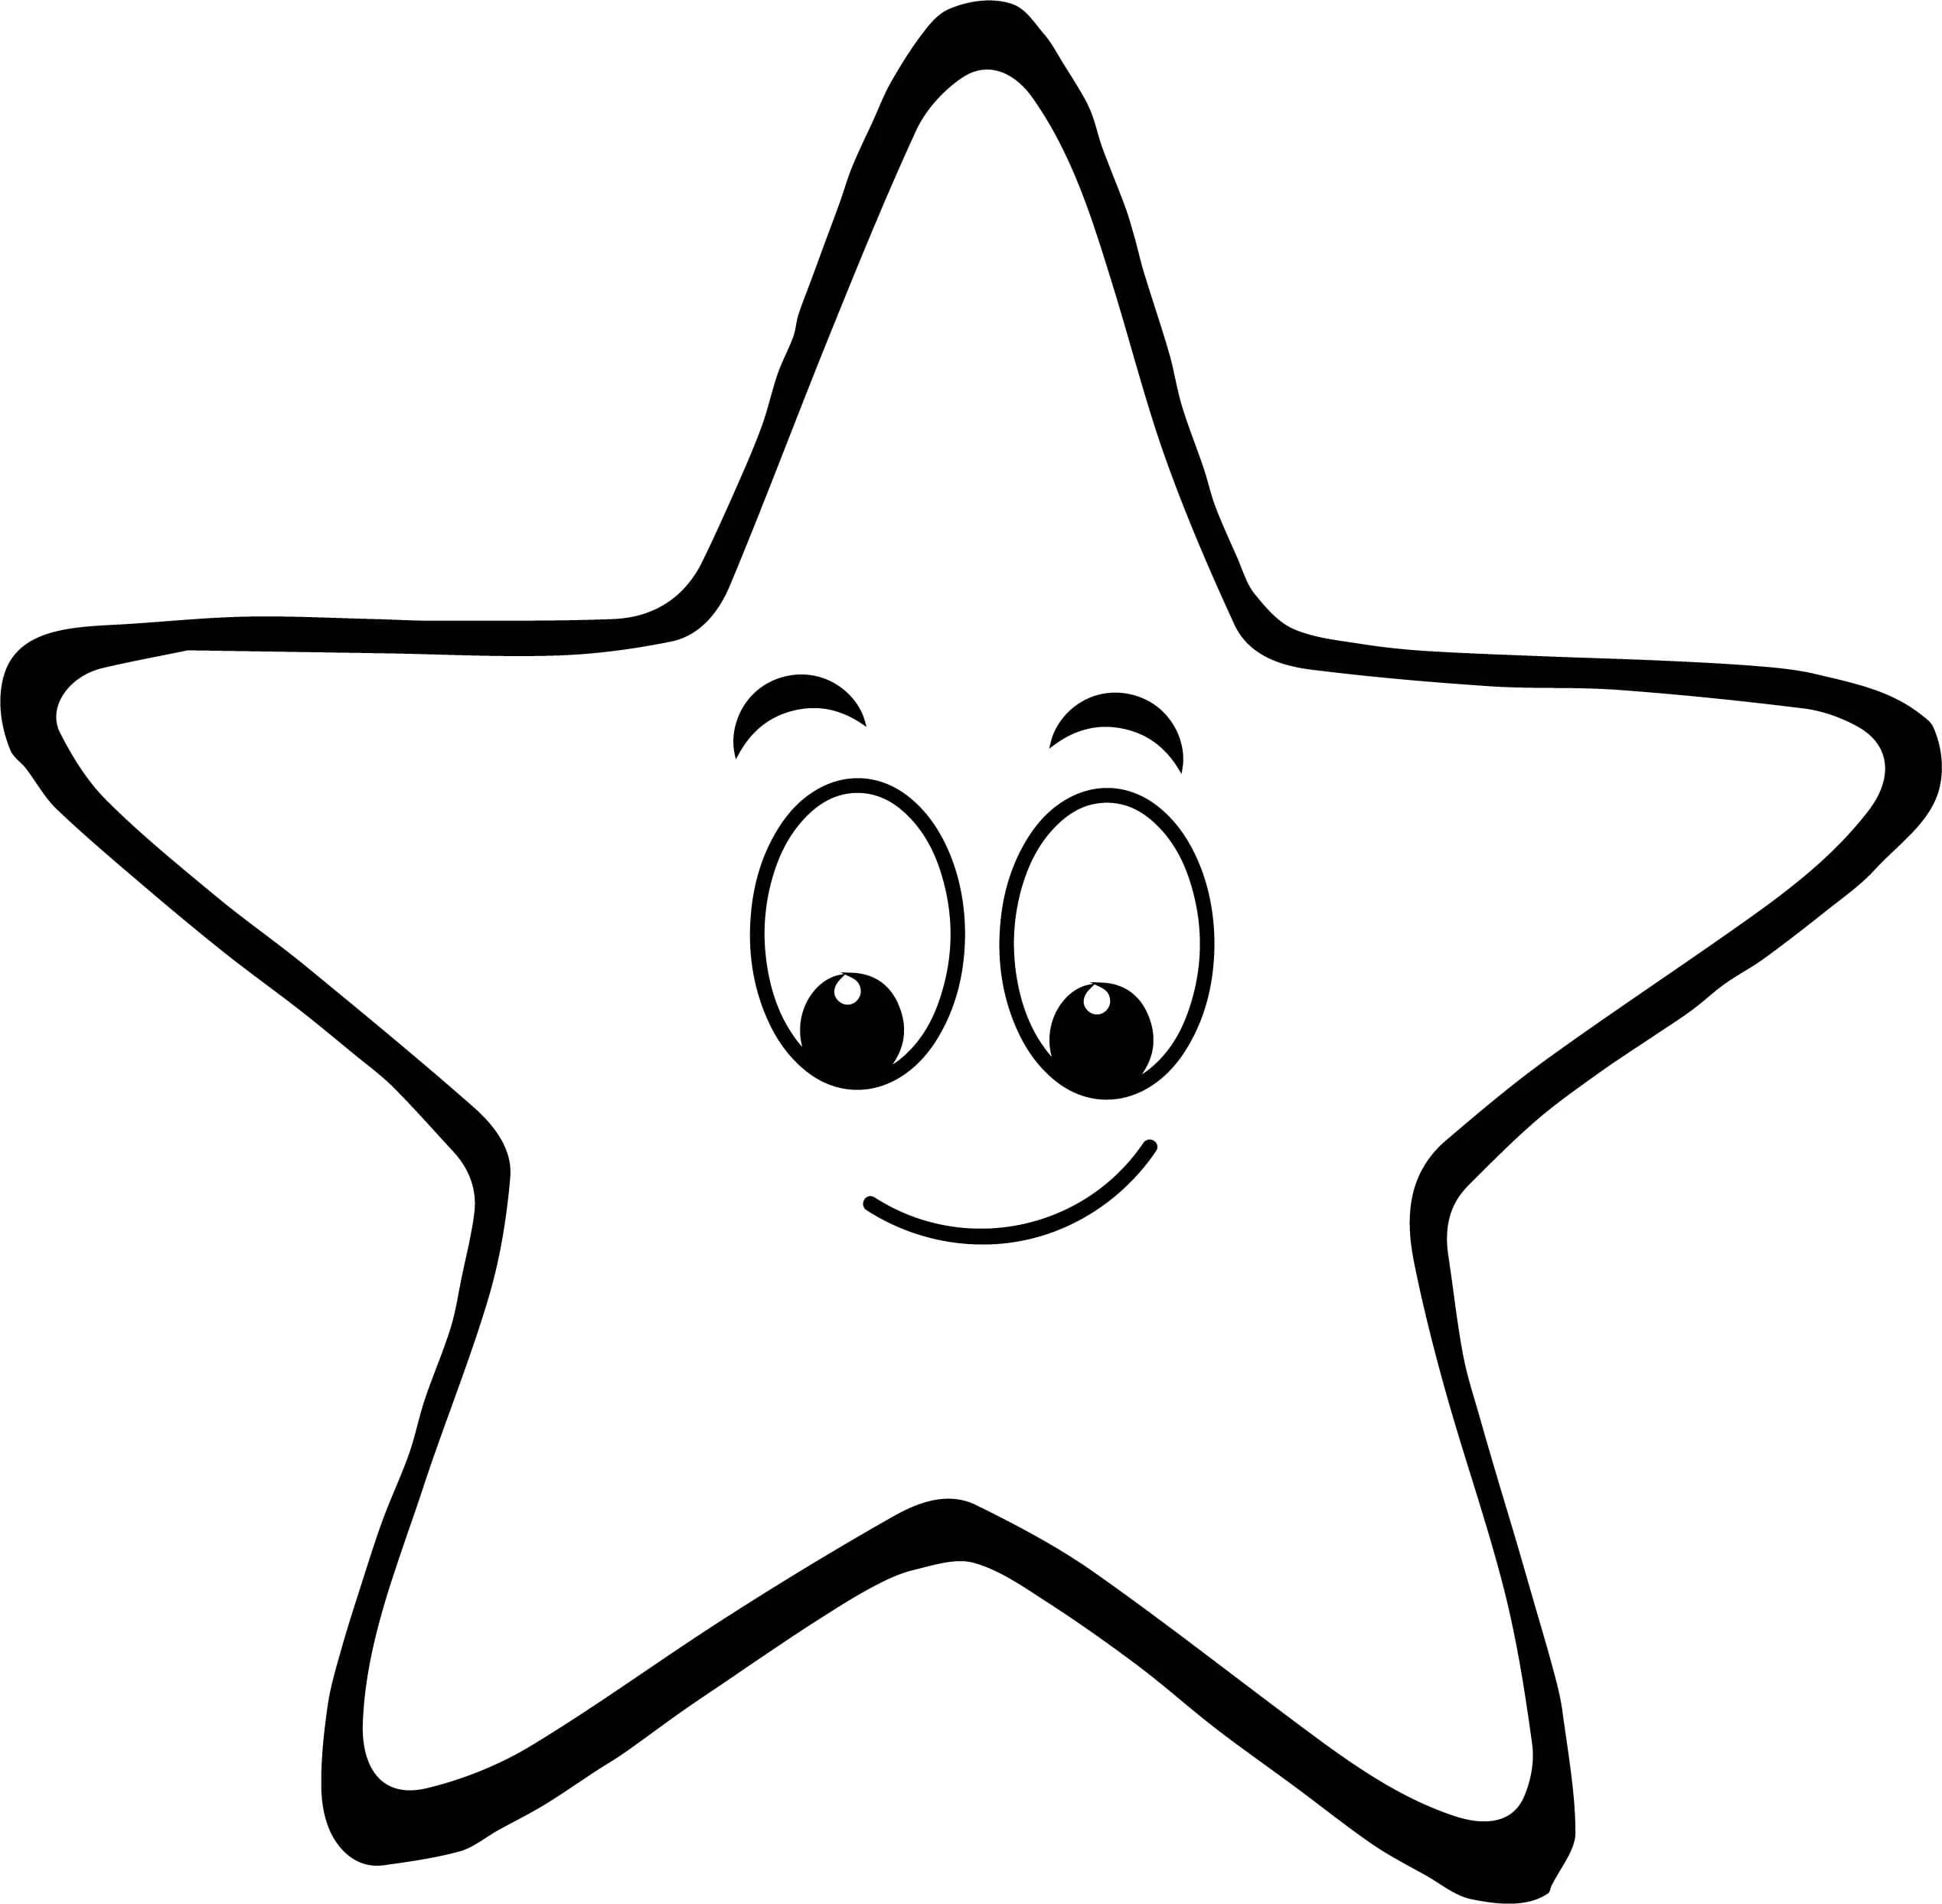 Coloring star for preschoolers